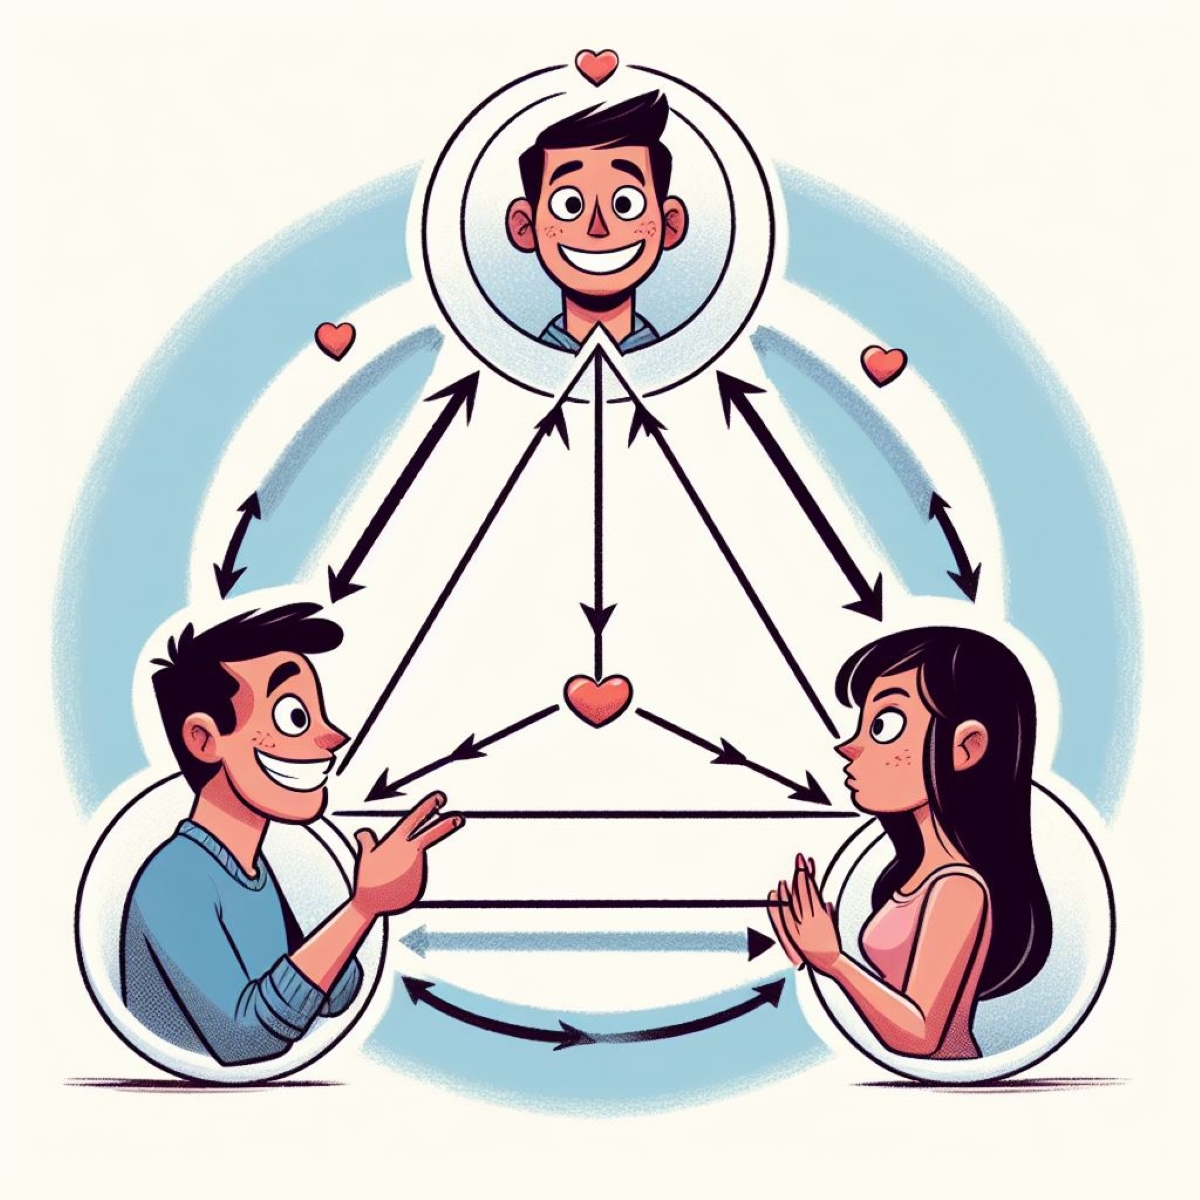 Triangulation technique in relationships